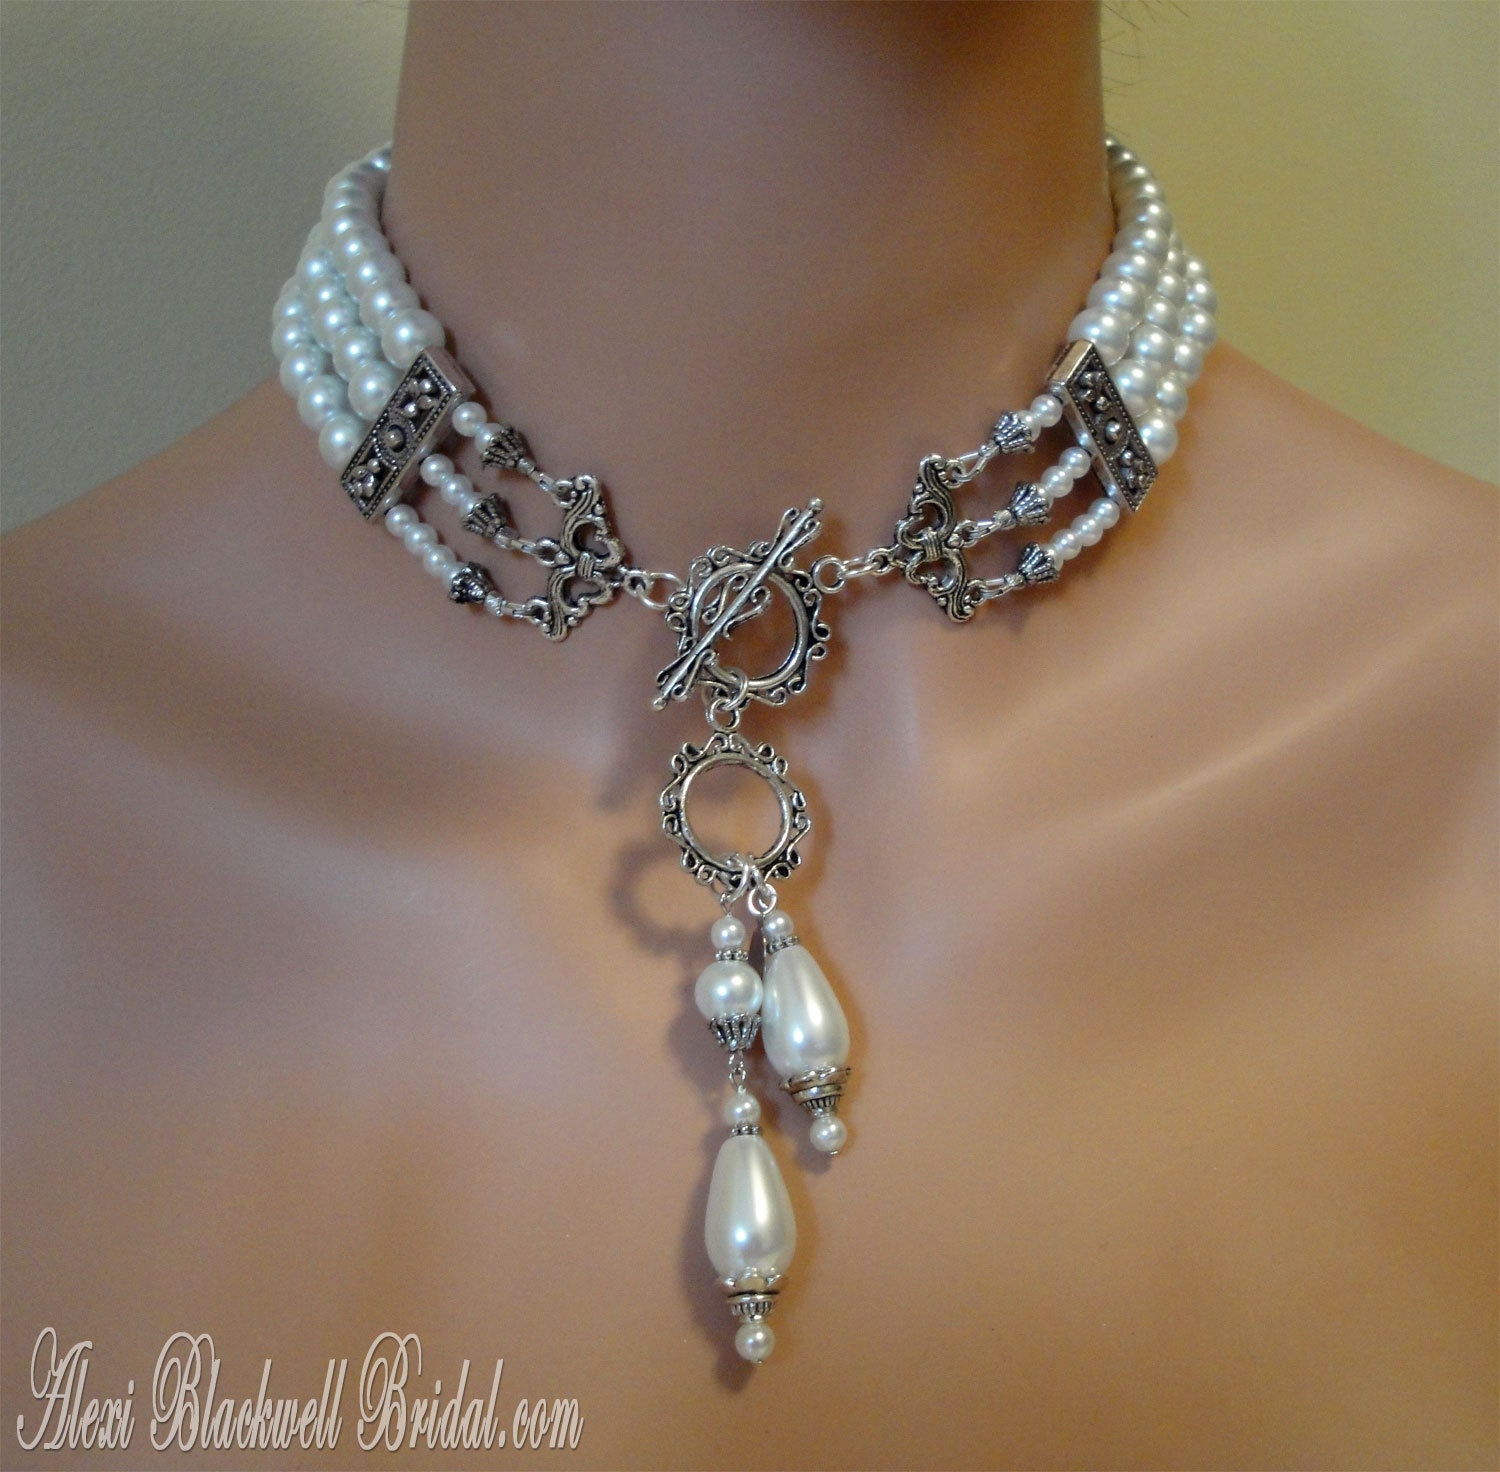 Victorian Pearl Choker Necklace Set includes Earrings Elegant